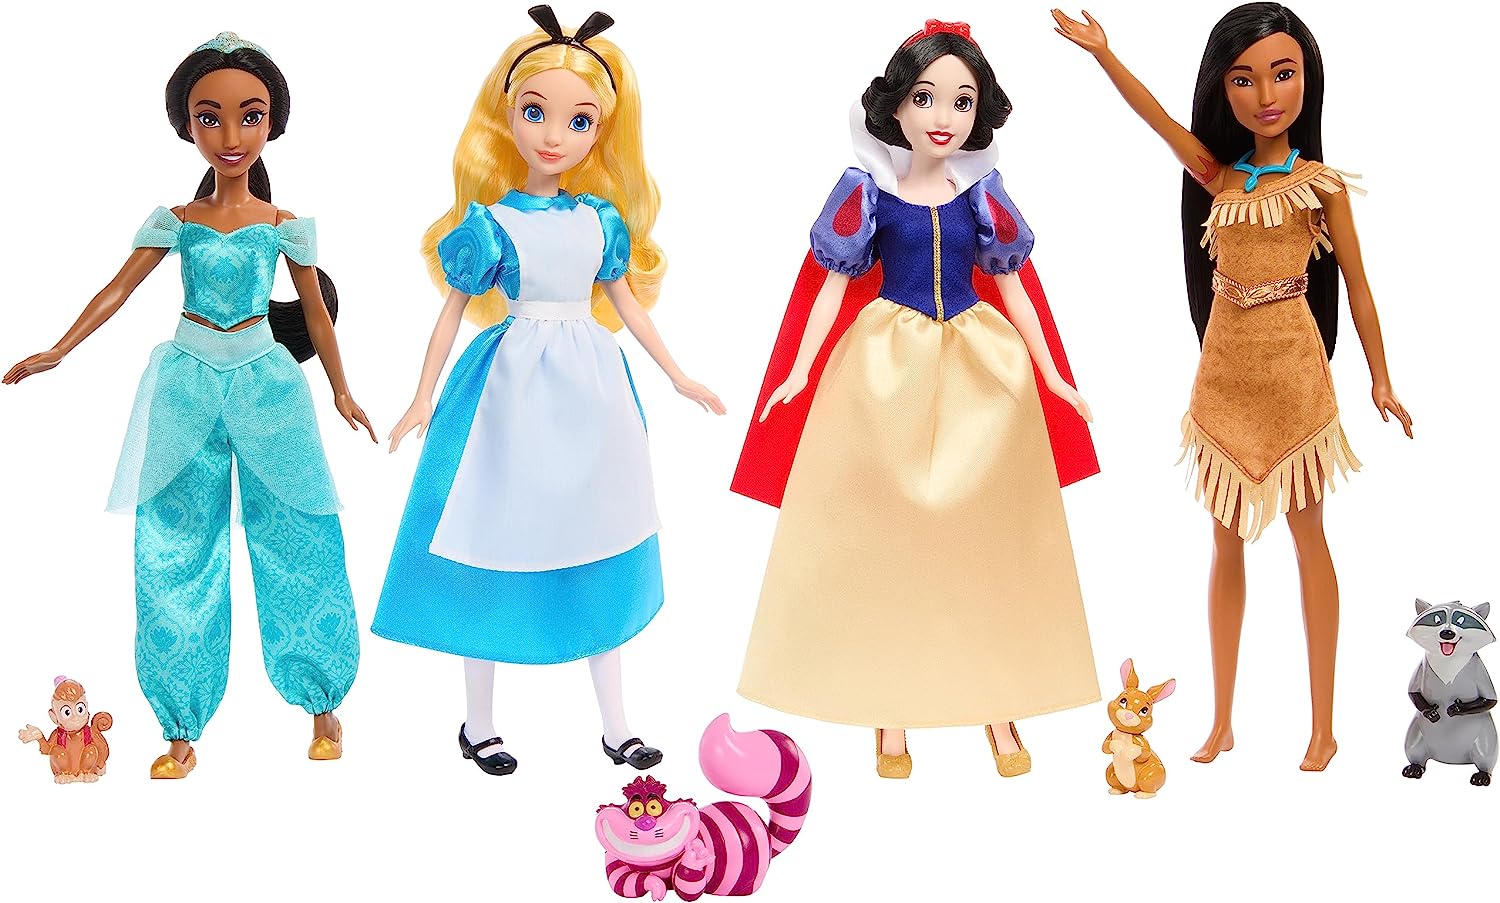 Disney's Princesses: From Snow White to 'Frozen